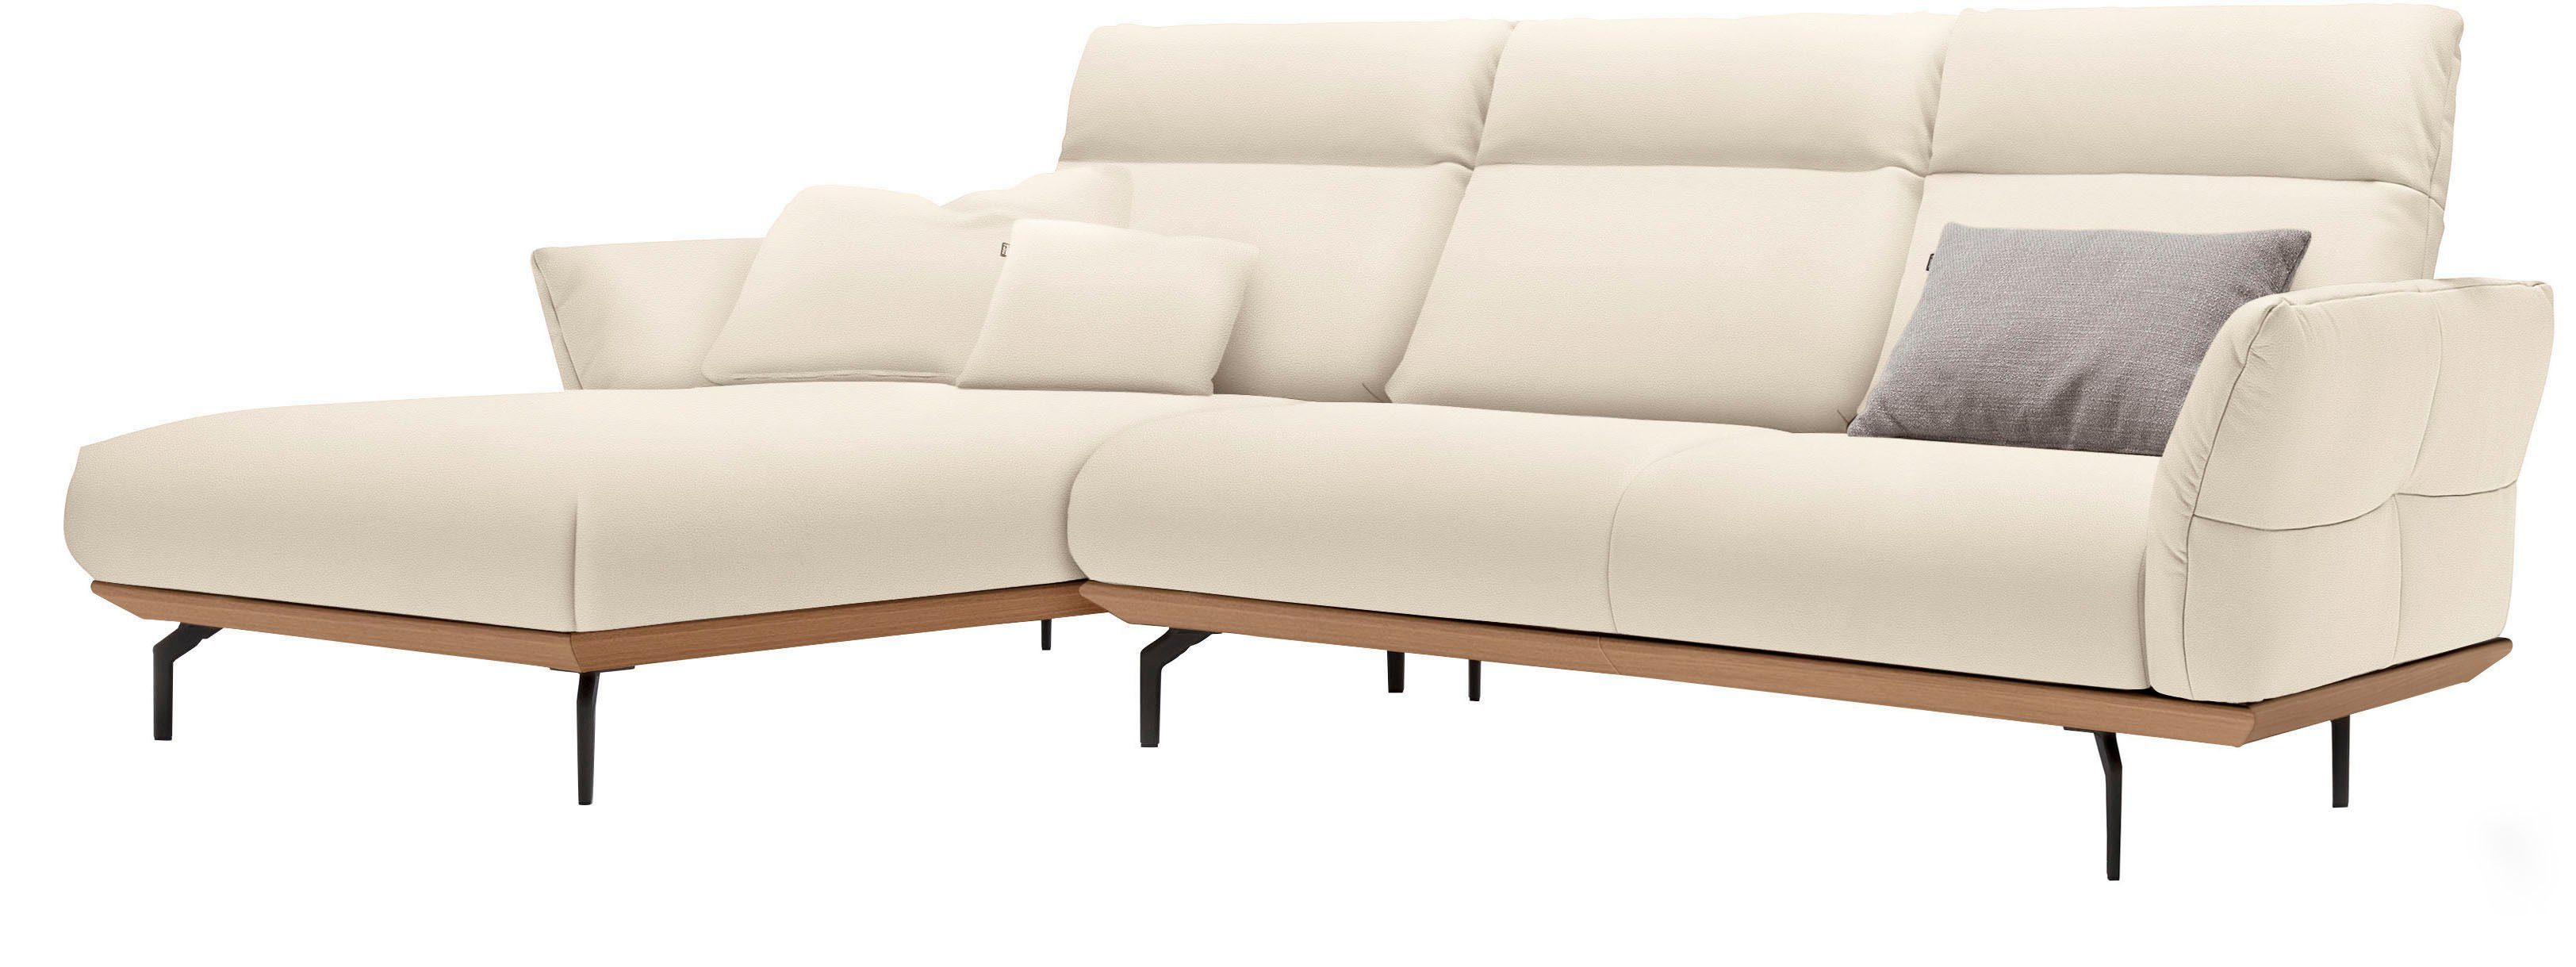 hülsta sofa Ecksofa hs.460, in in Eiche, cm umbragrau, Alugussfüße 298 Breite Sockel